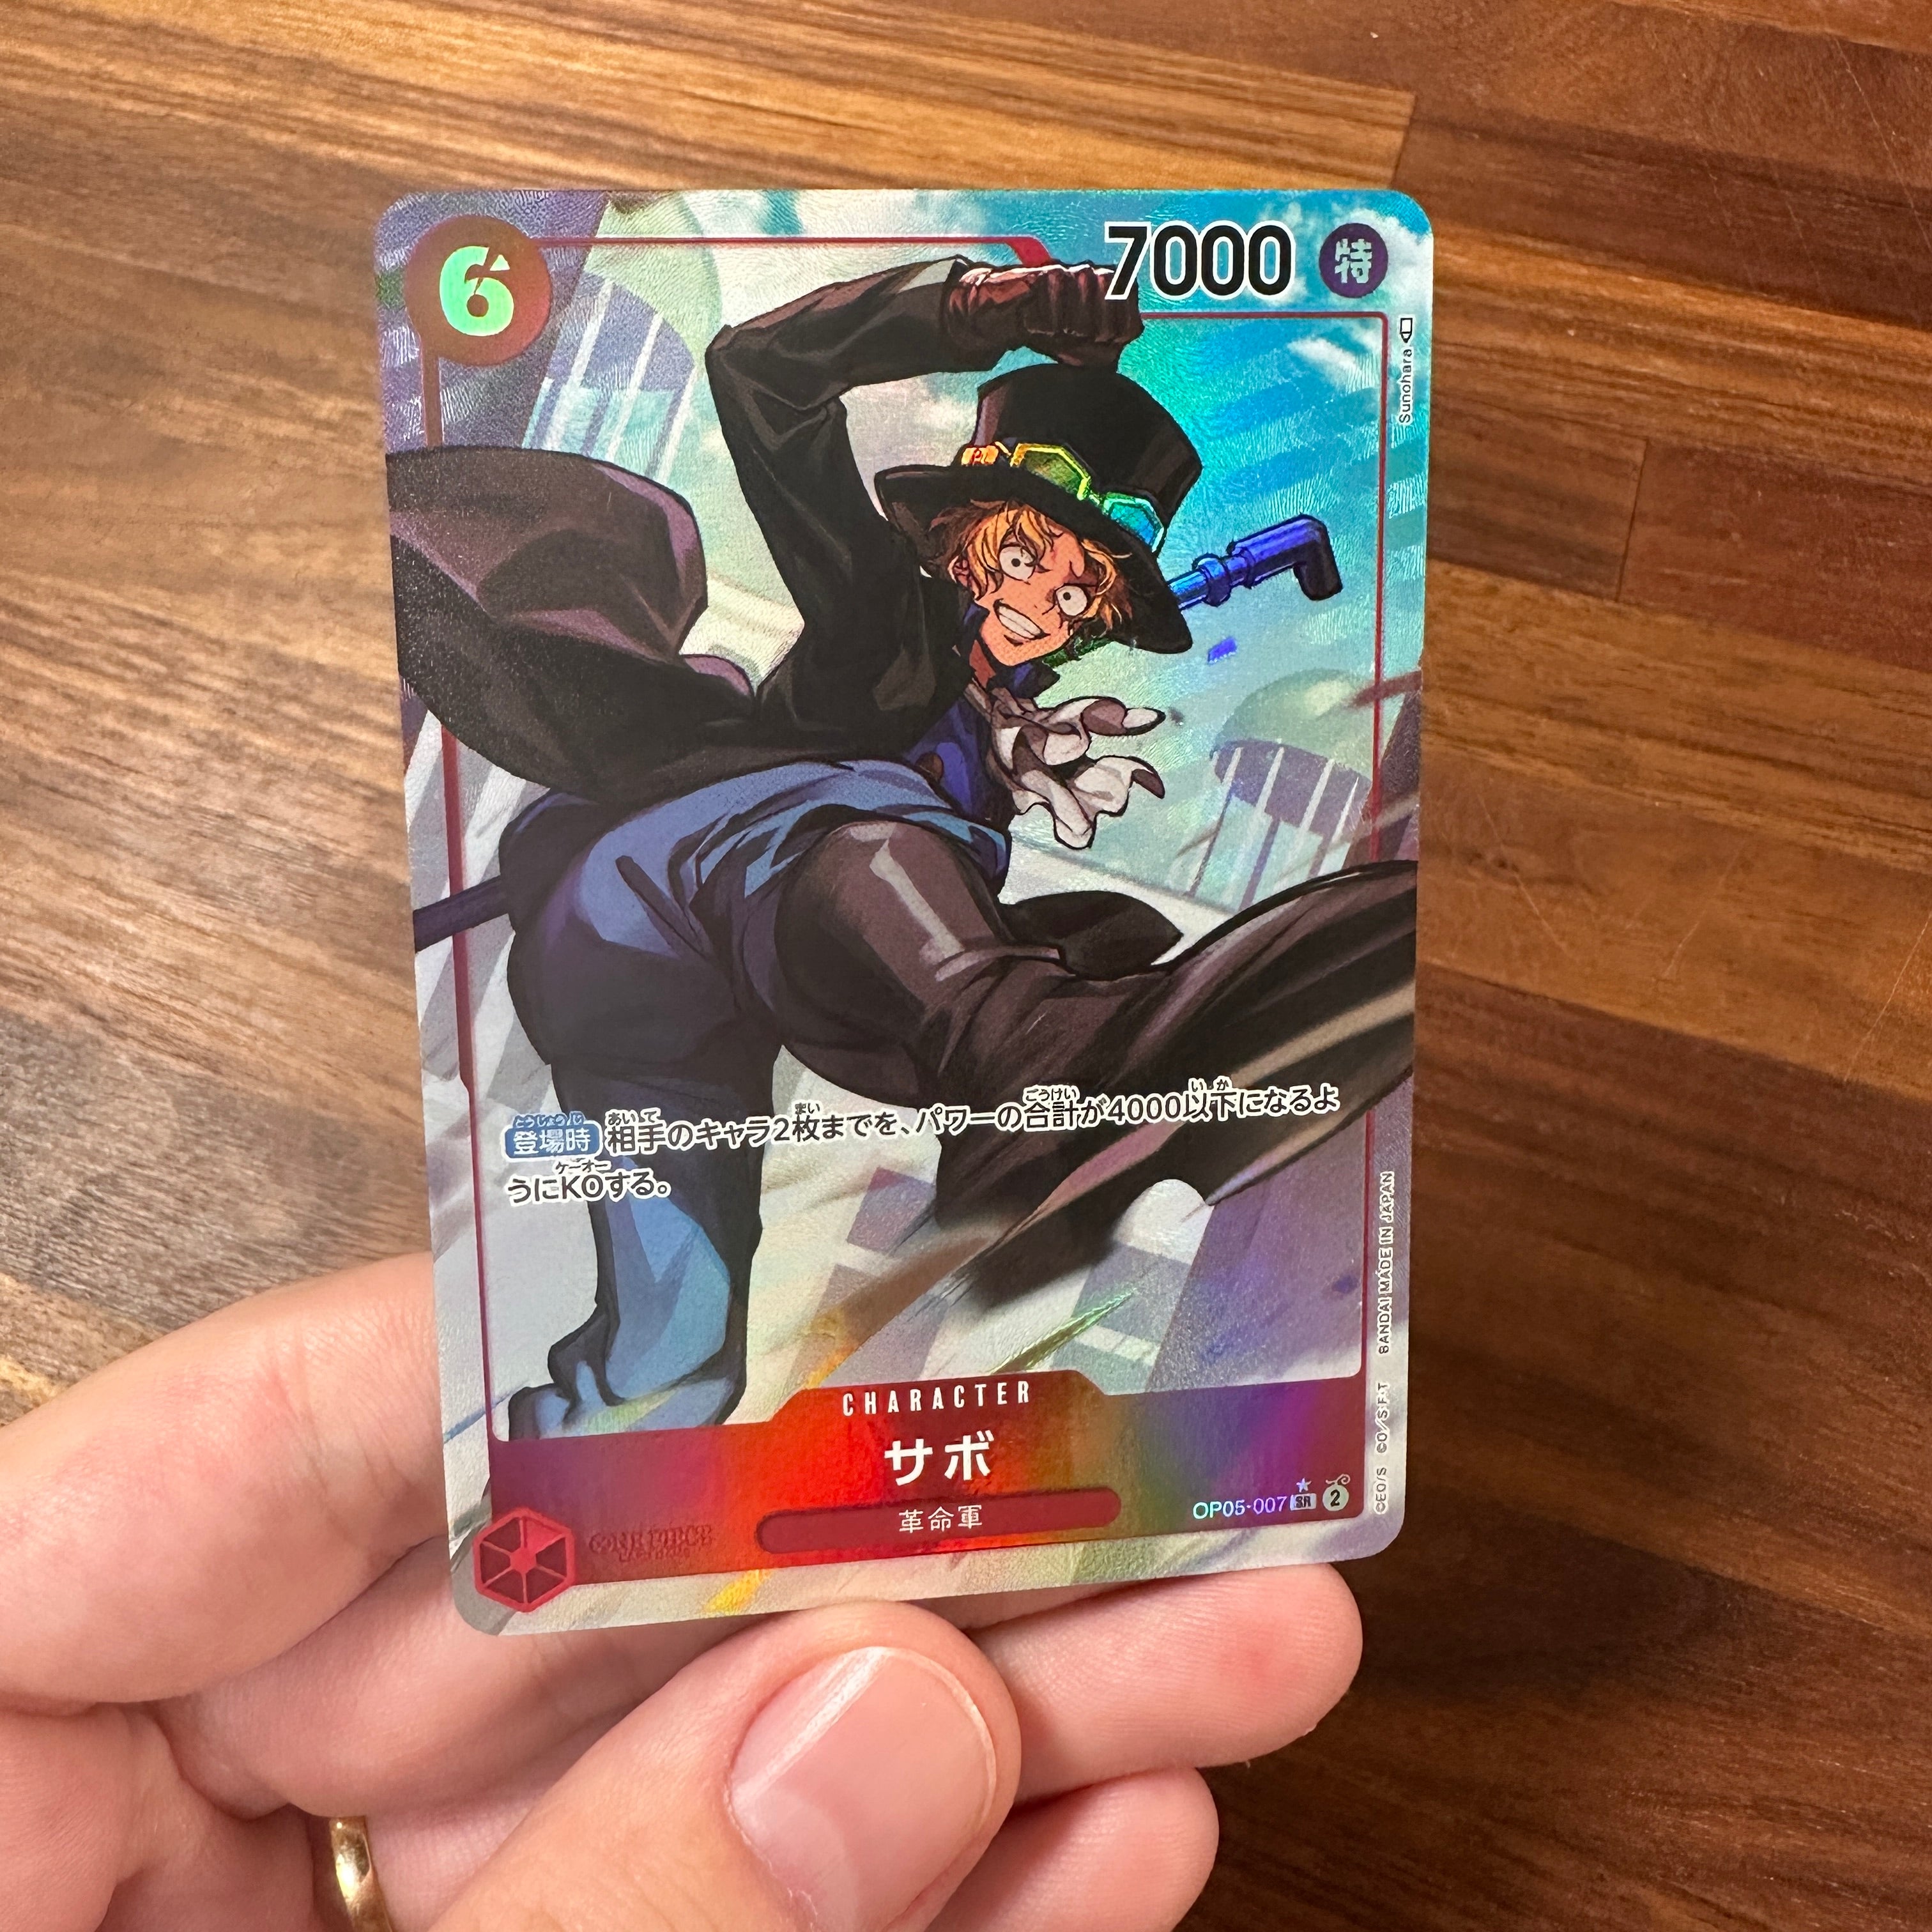 ONE PIECE CARD GAME ｢Awakening of the New Era｣  ONE PIECE CARD GAME OP05-007 Super Rare Parallel card  Sabo